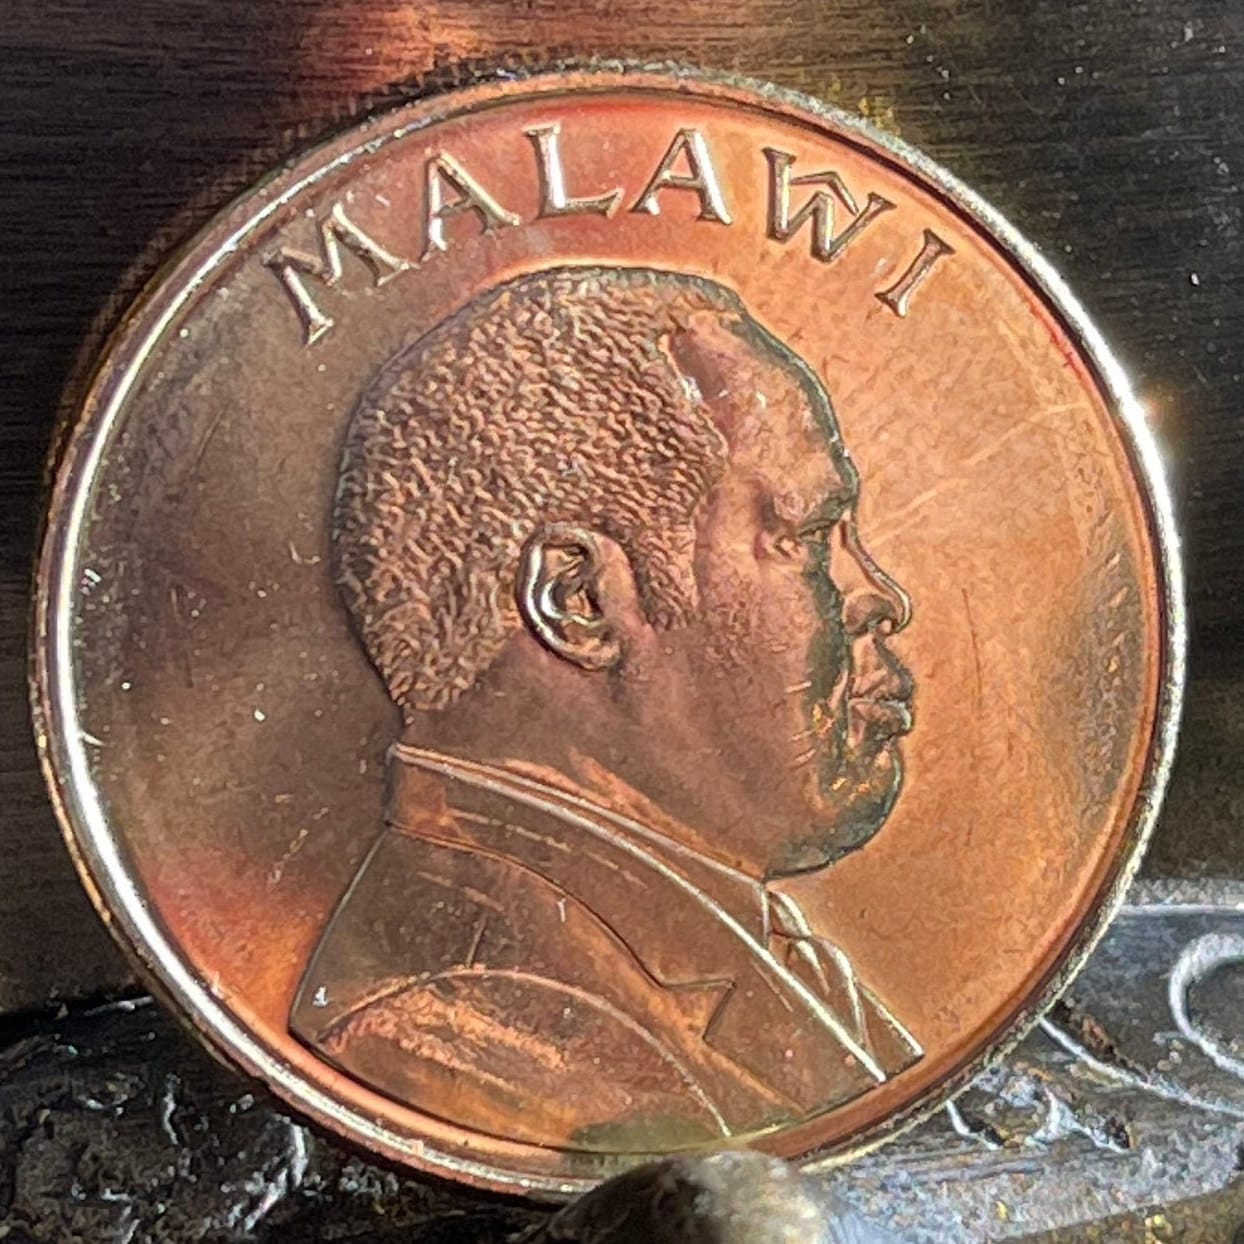 Fish Eagle & President Muluzi Malawi 1 Kwacha Authentic Coin Money for Jewelry and Craft Making (President Bakili Muluzi)